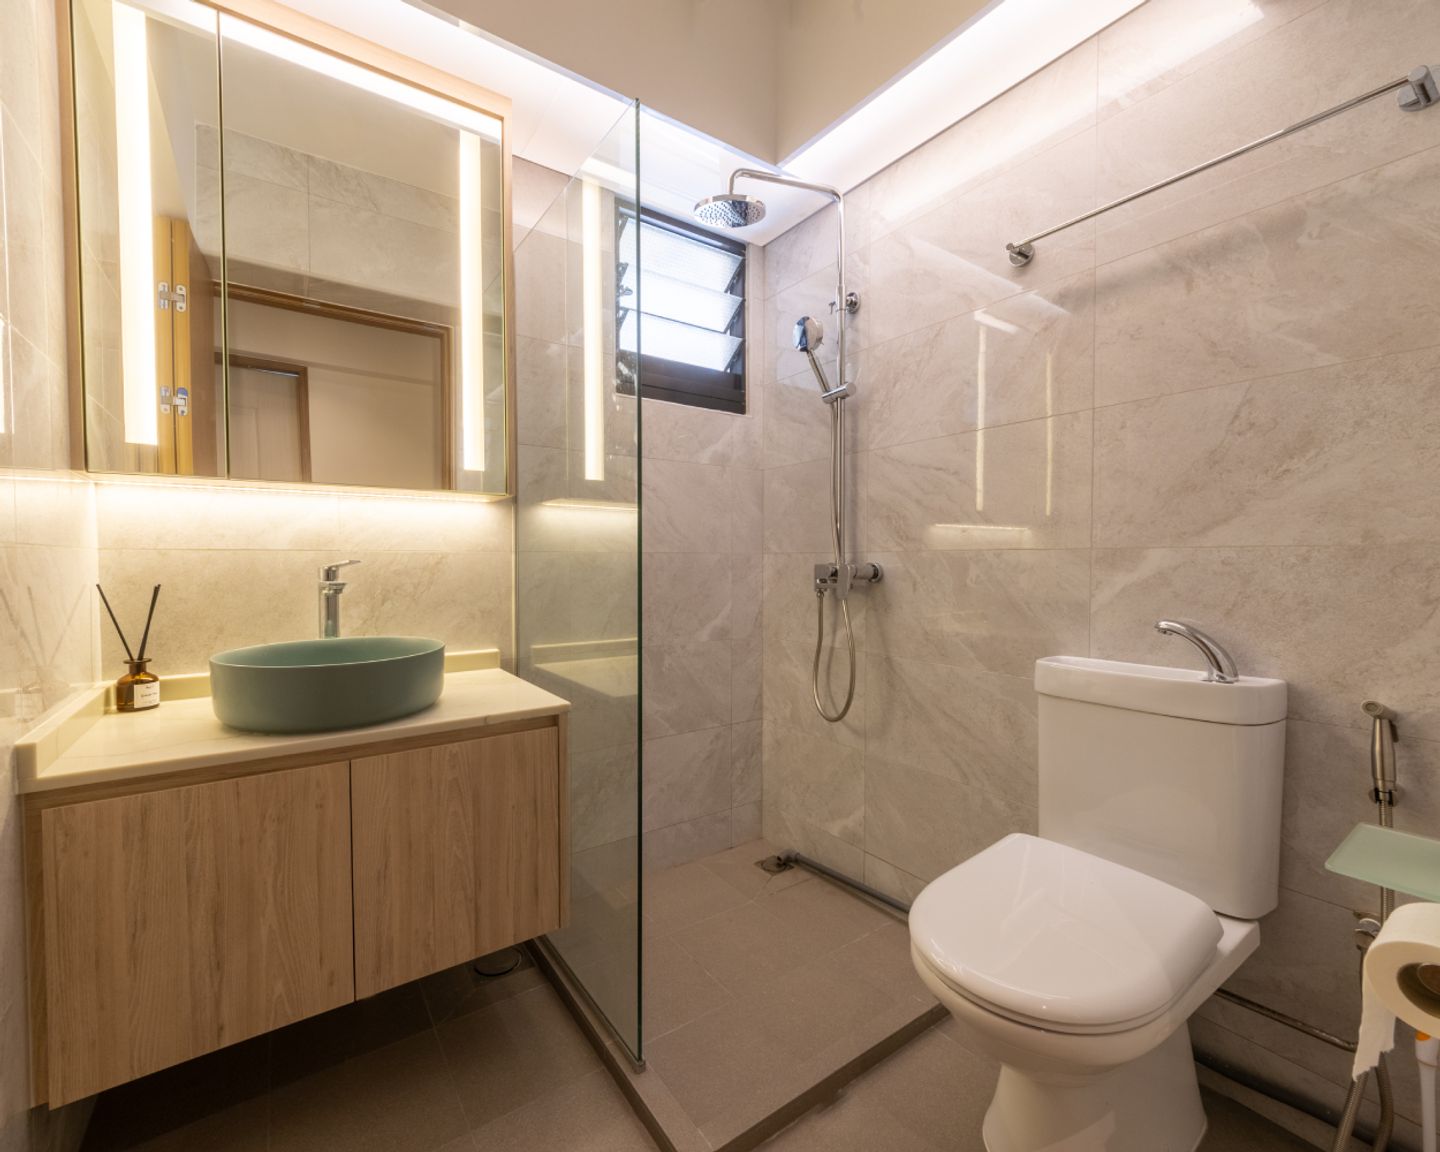 Contemporary Bathroom Design With A Rectangular Mirror - Livspace